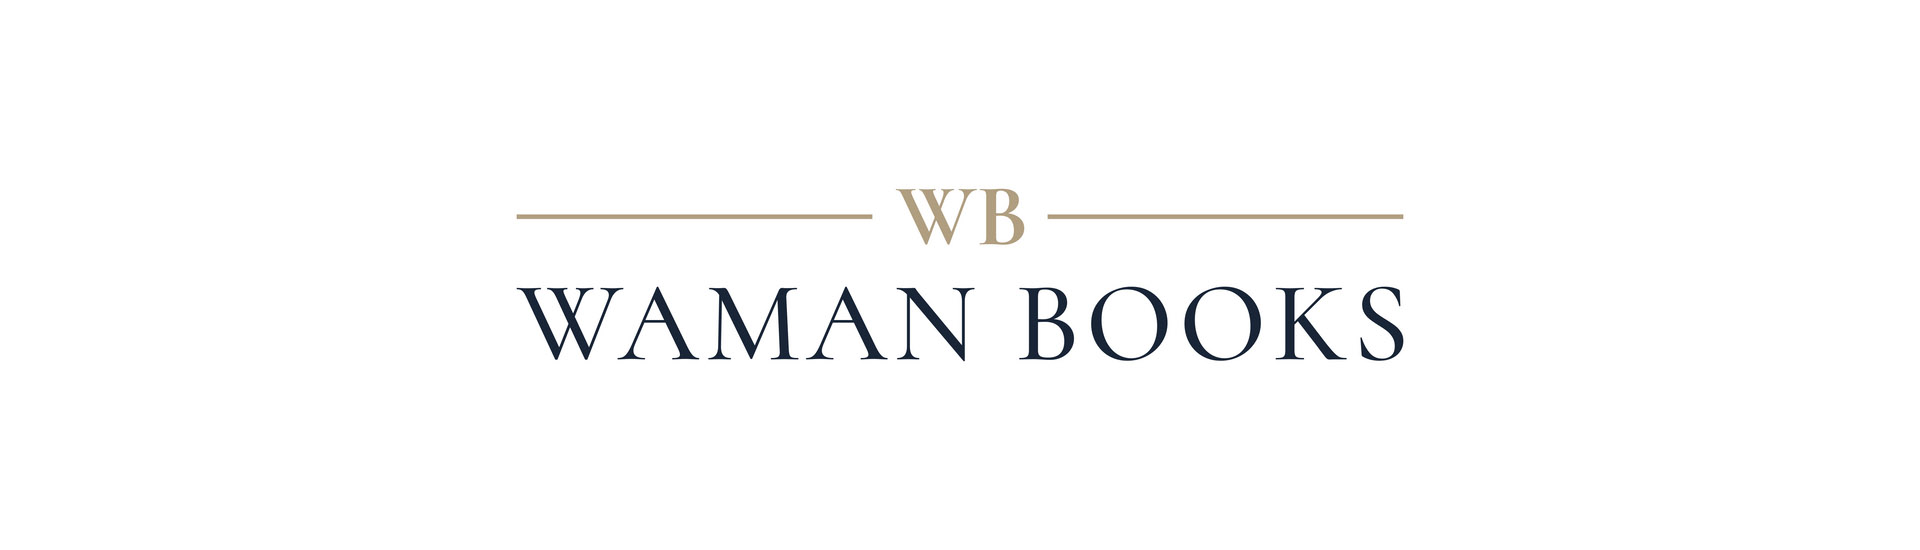 Image for Waman Books